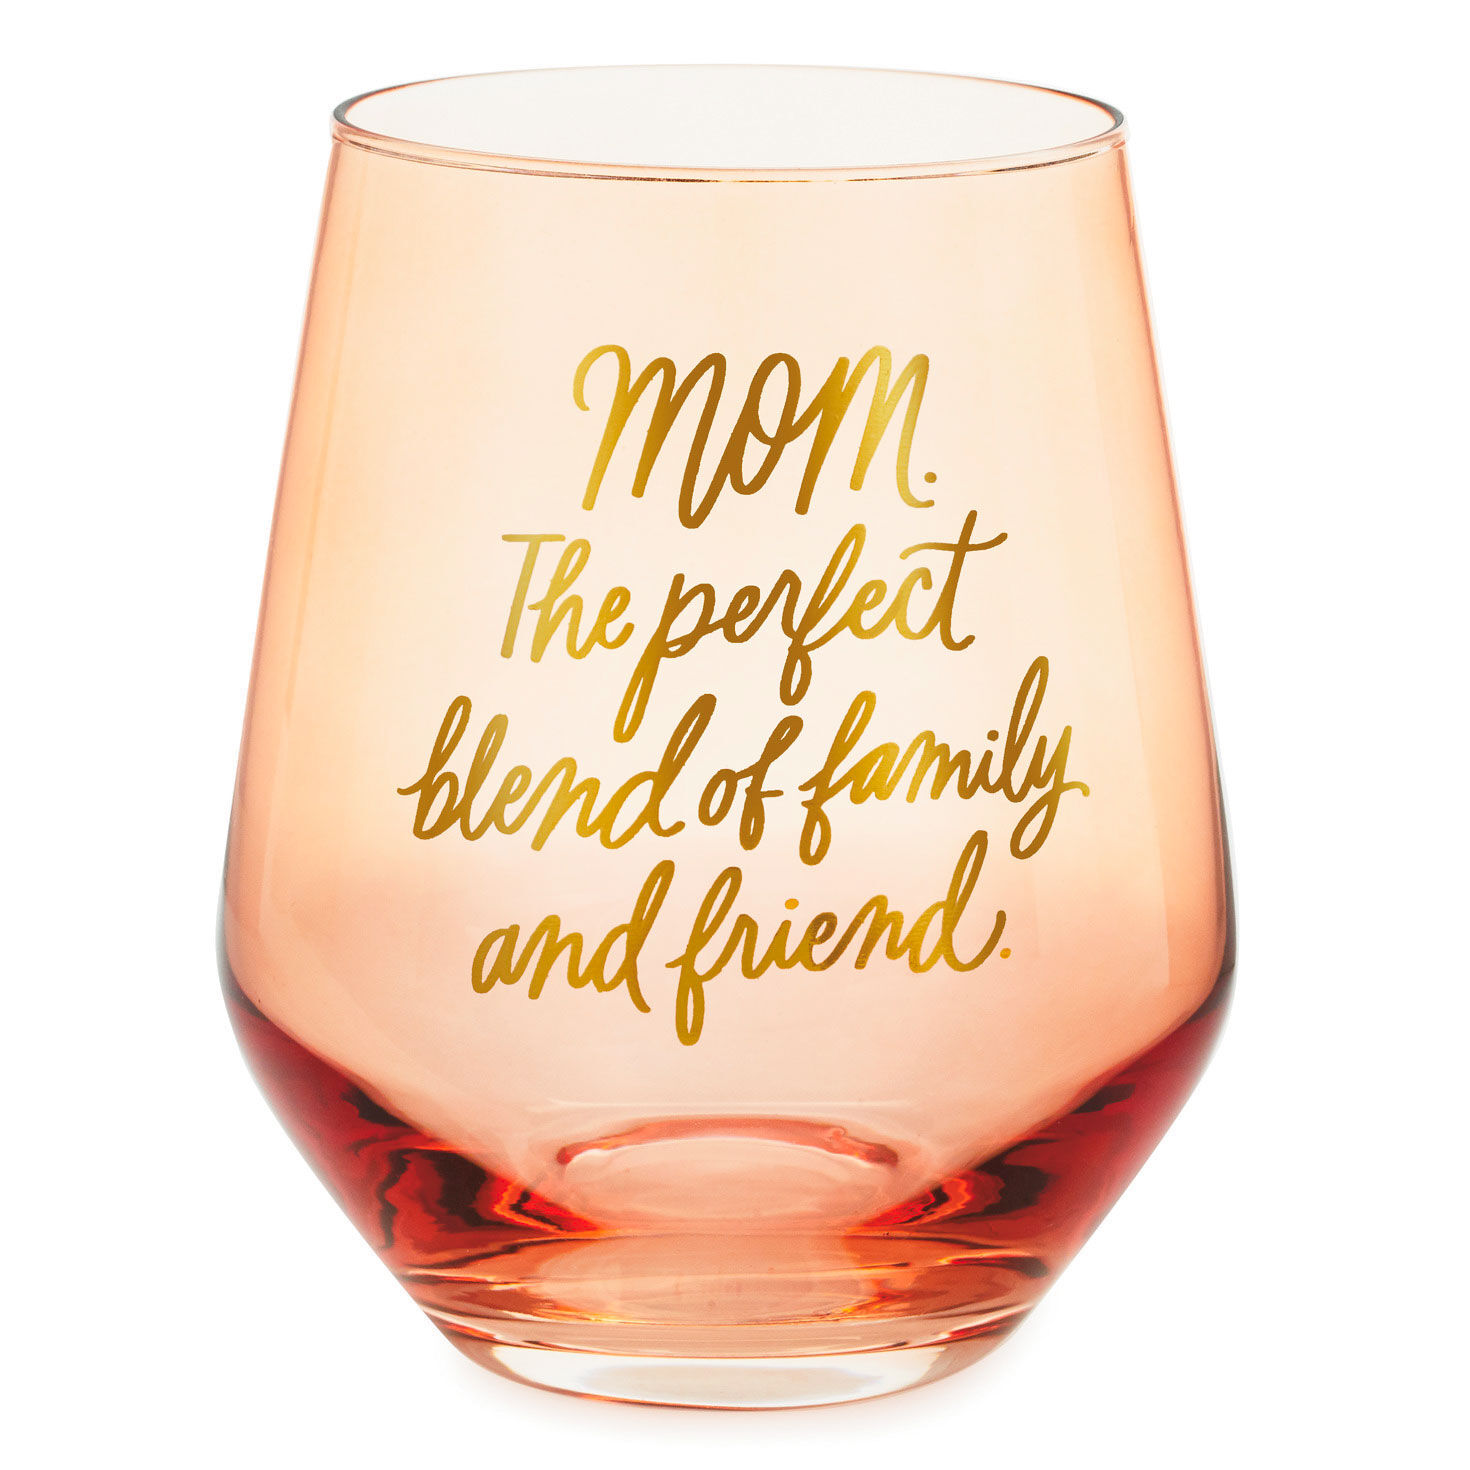 Wine Glass - Mom of the Year - Santa Barbara Design Studio